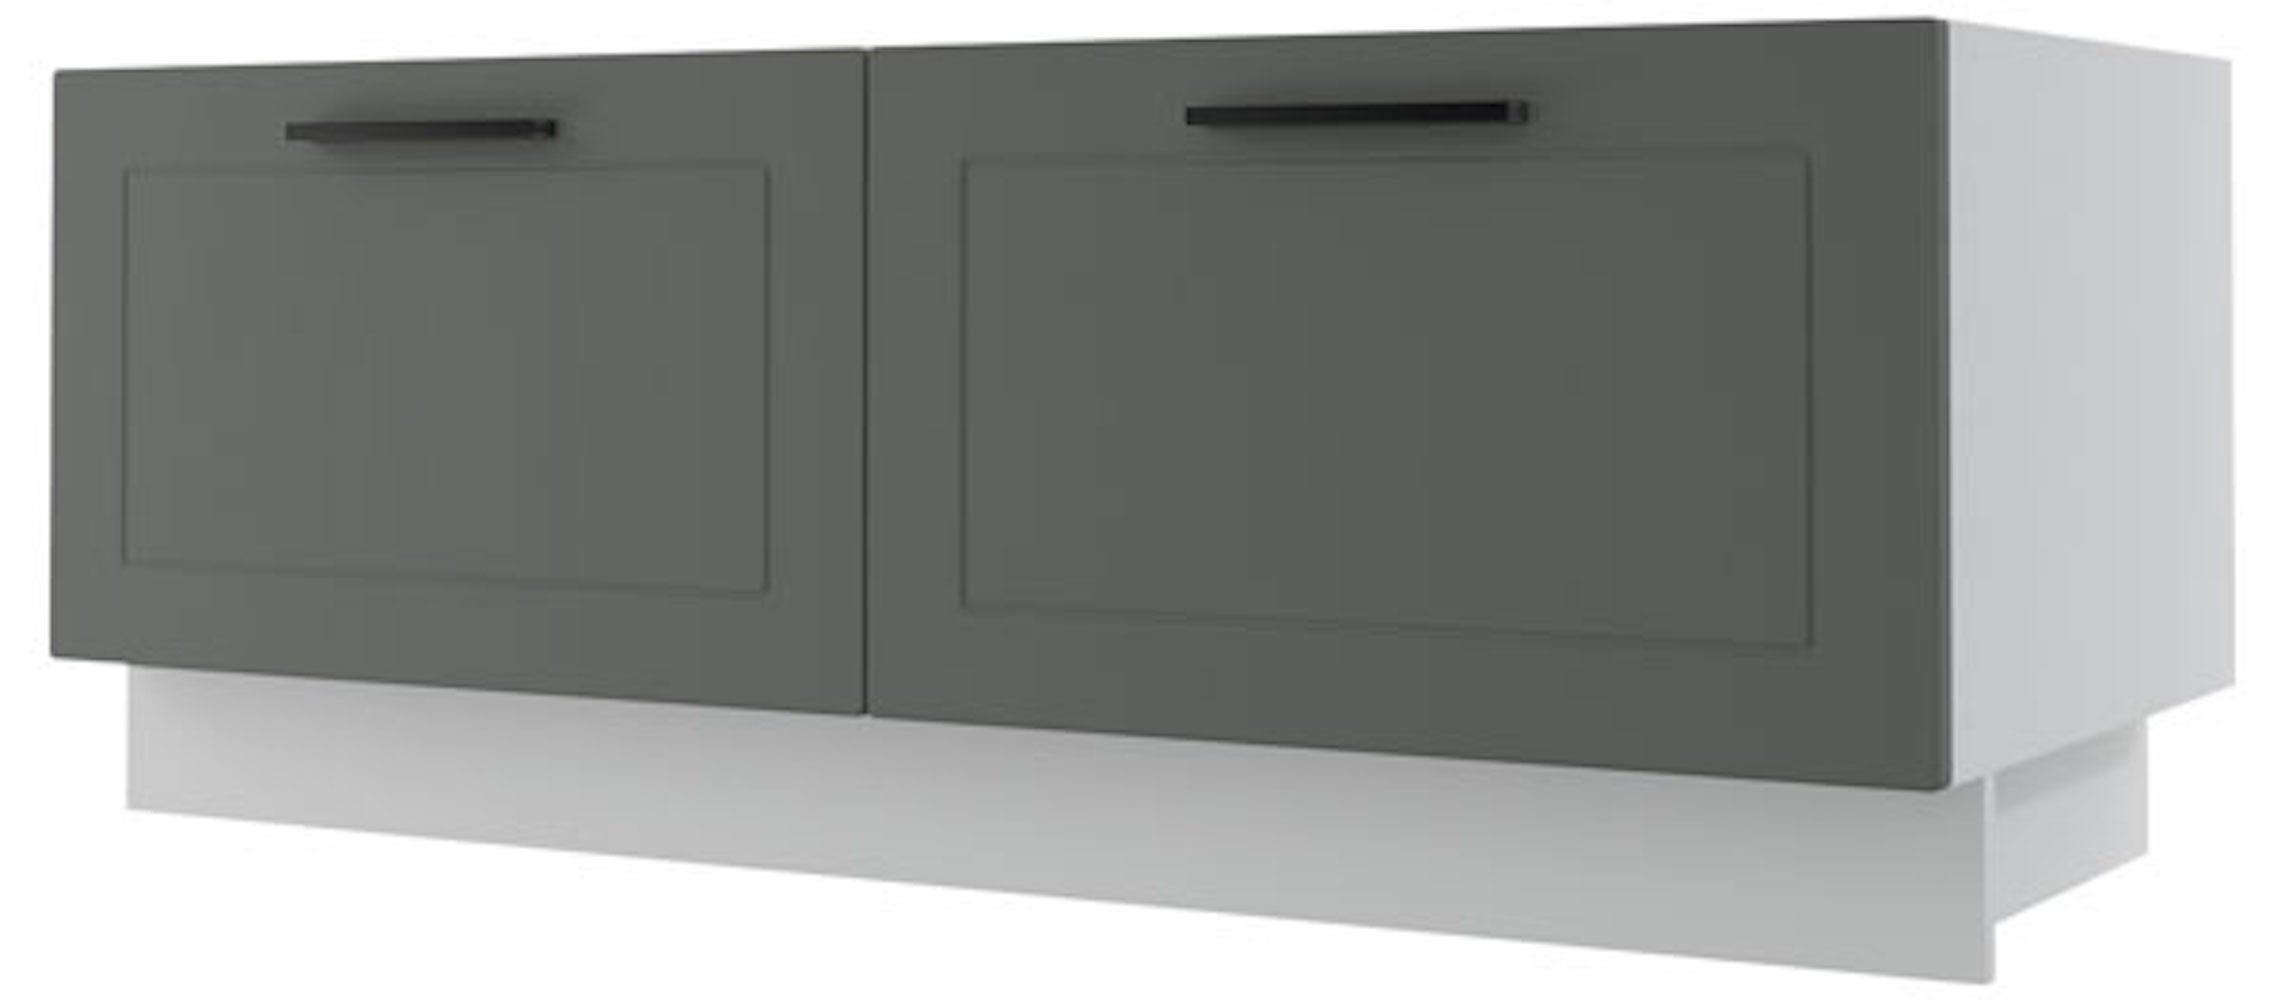 Feldmann-Wohnen Unterschrank Kvantum (Kvantum) 120cm Front- & Korpusfarbe wählbar mit 2 Schubladen (Teilauszug) mint matt | Unterschränke